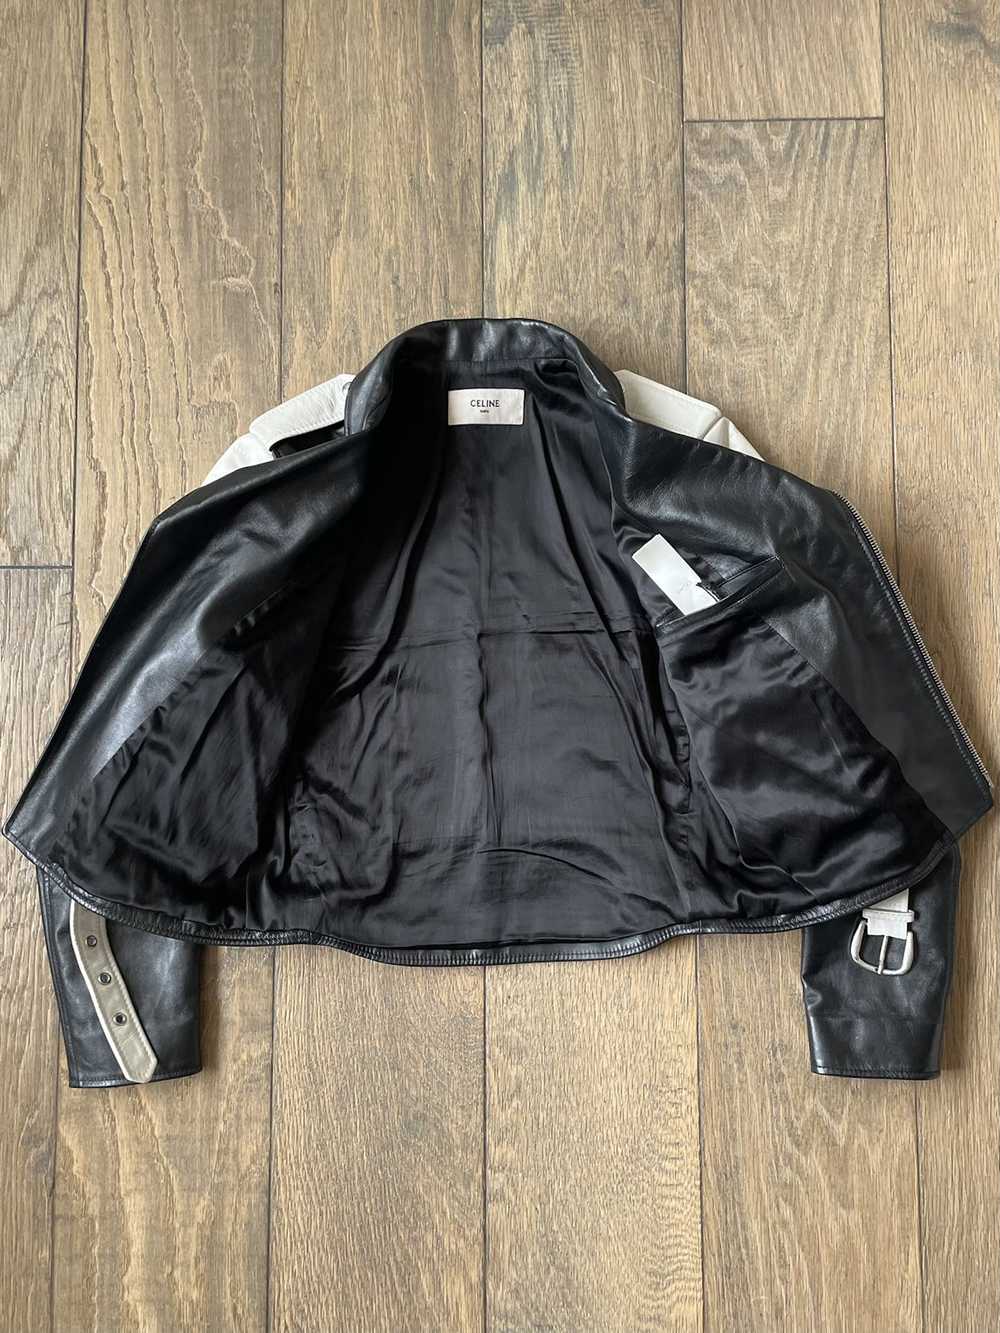 Celine Celine Motorcycle Leather Jacket - image 3